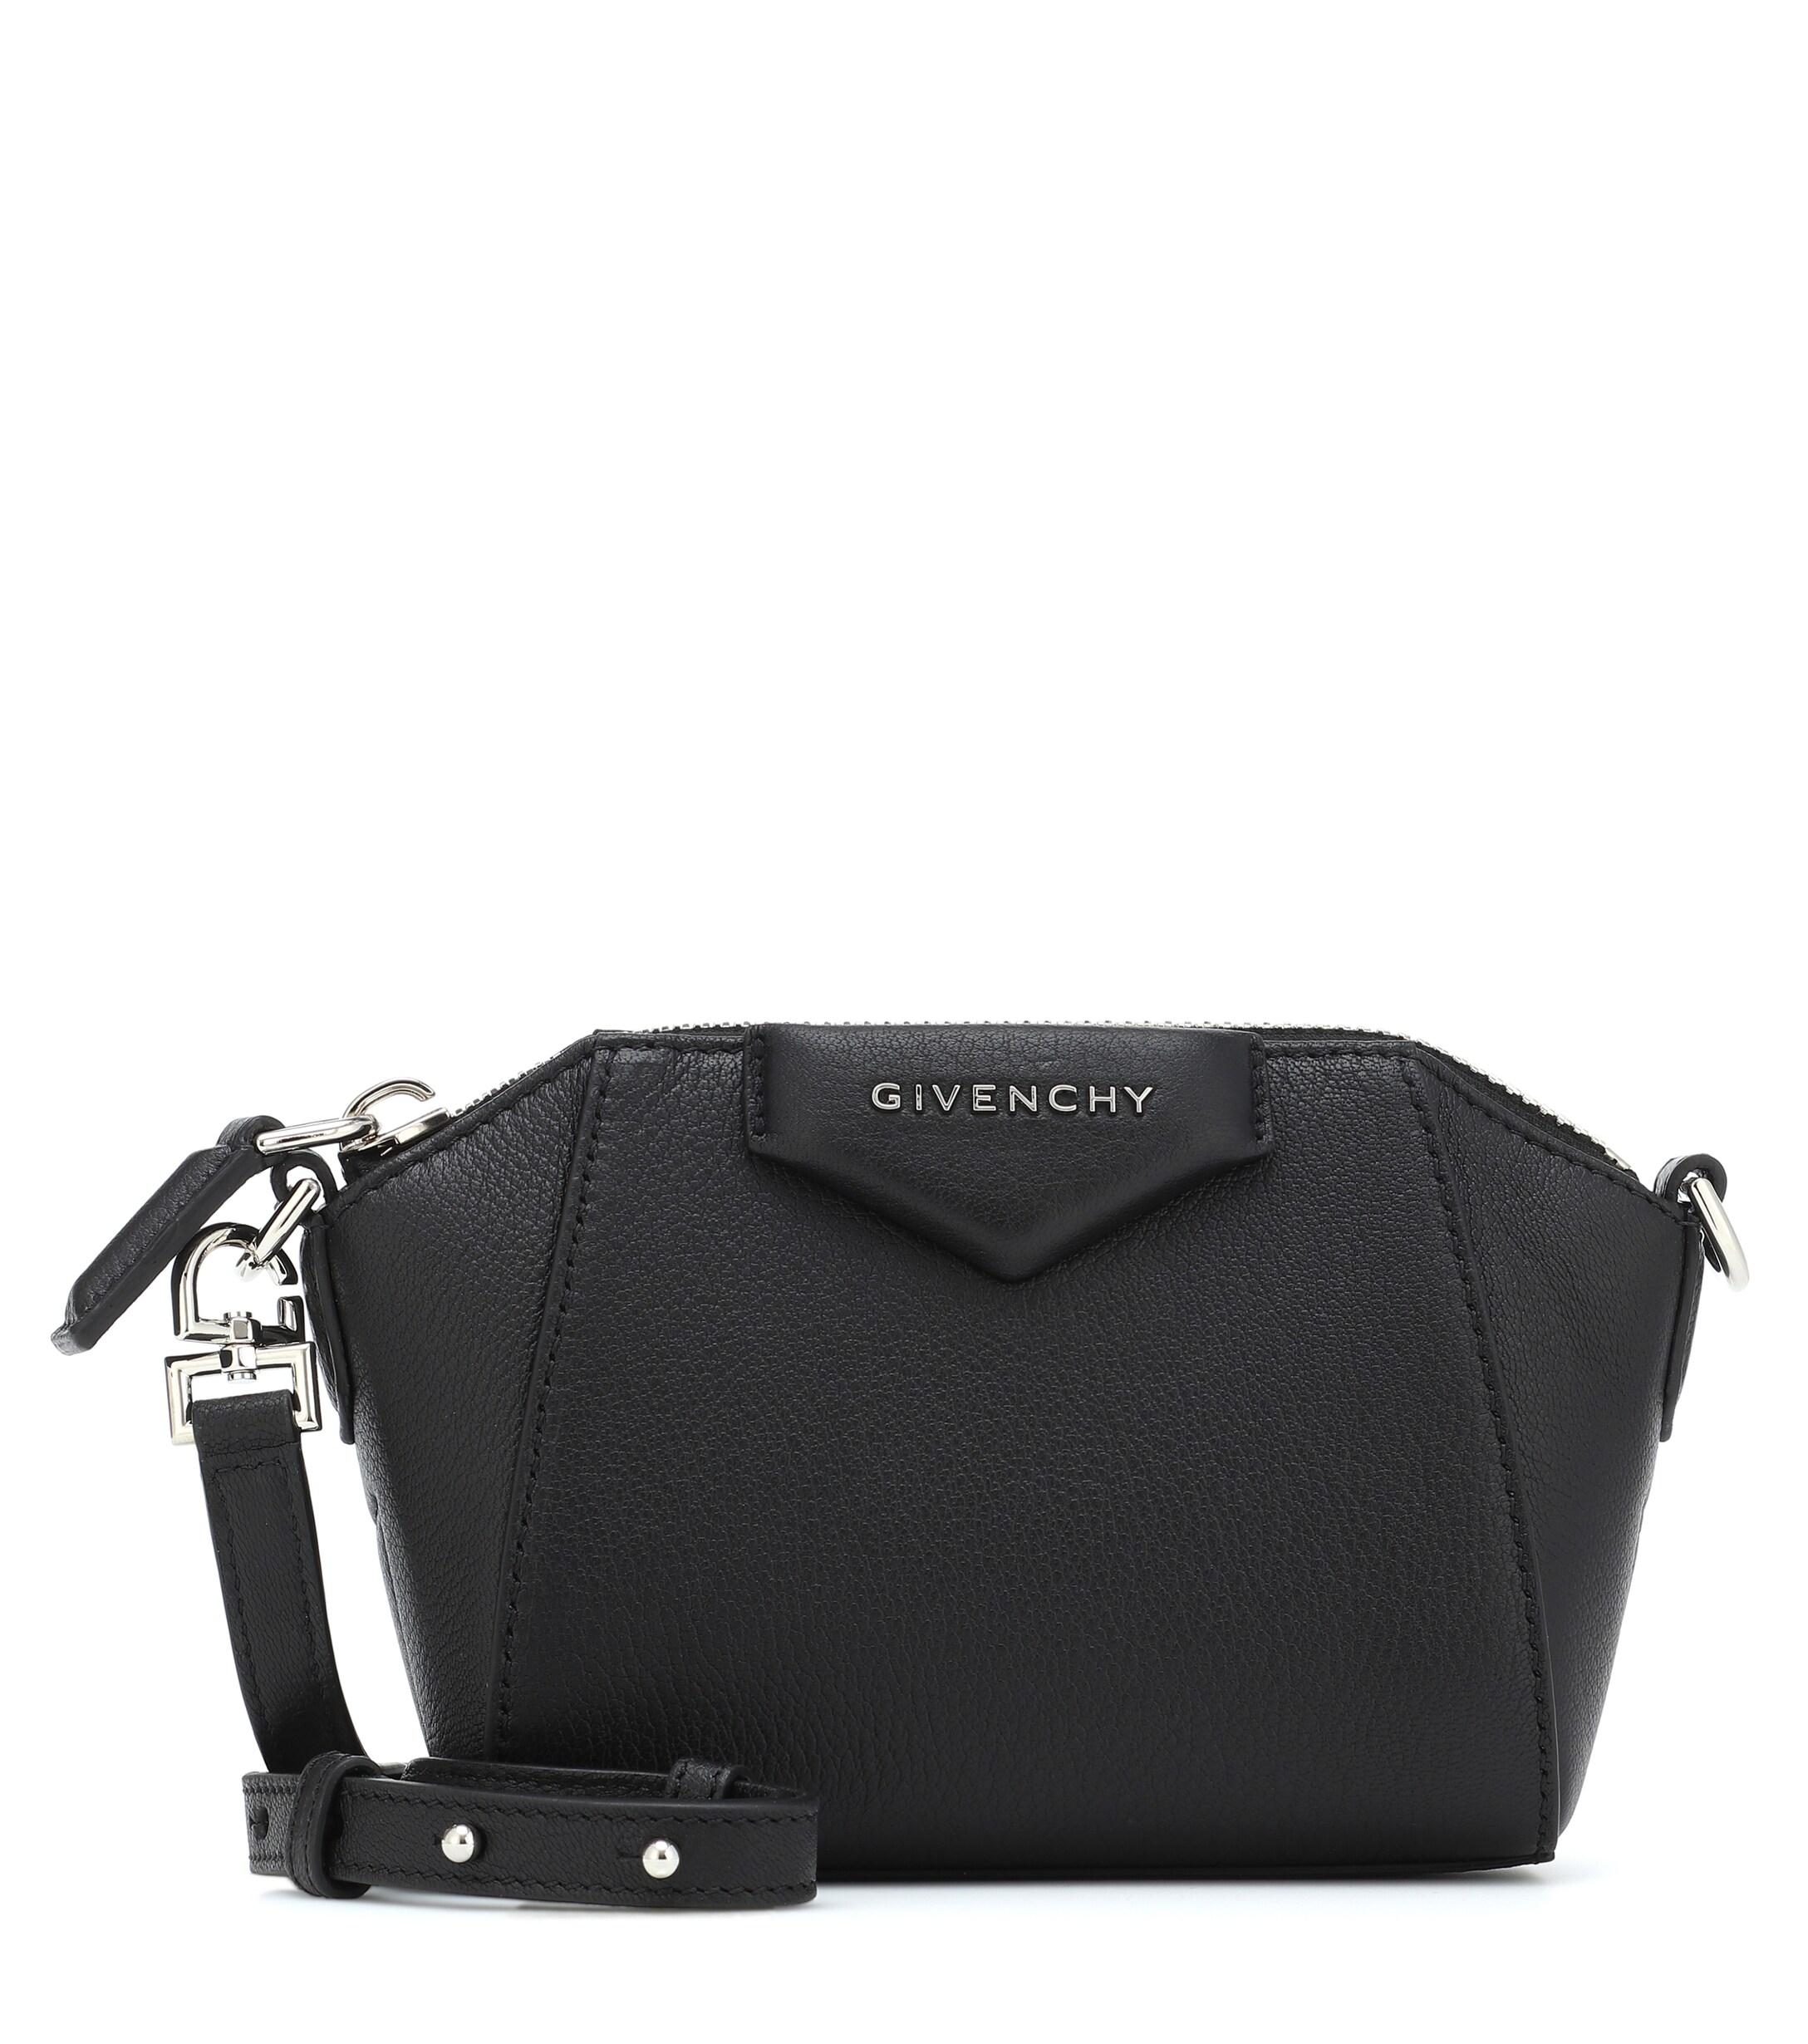 Givenchy Antigona Nano Leather Crossbody Bag in Black - Lyst